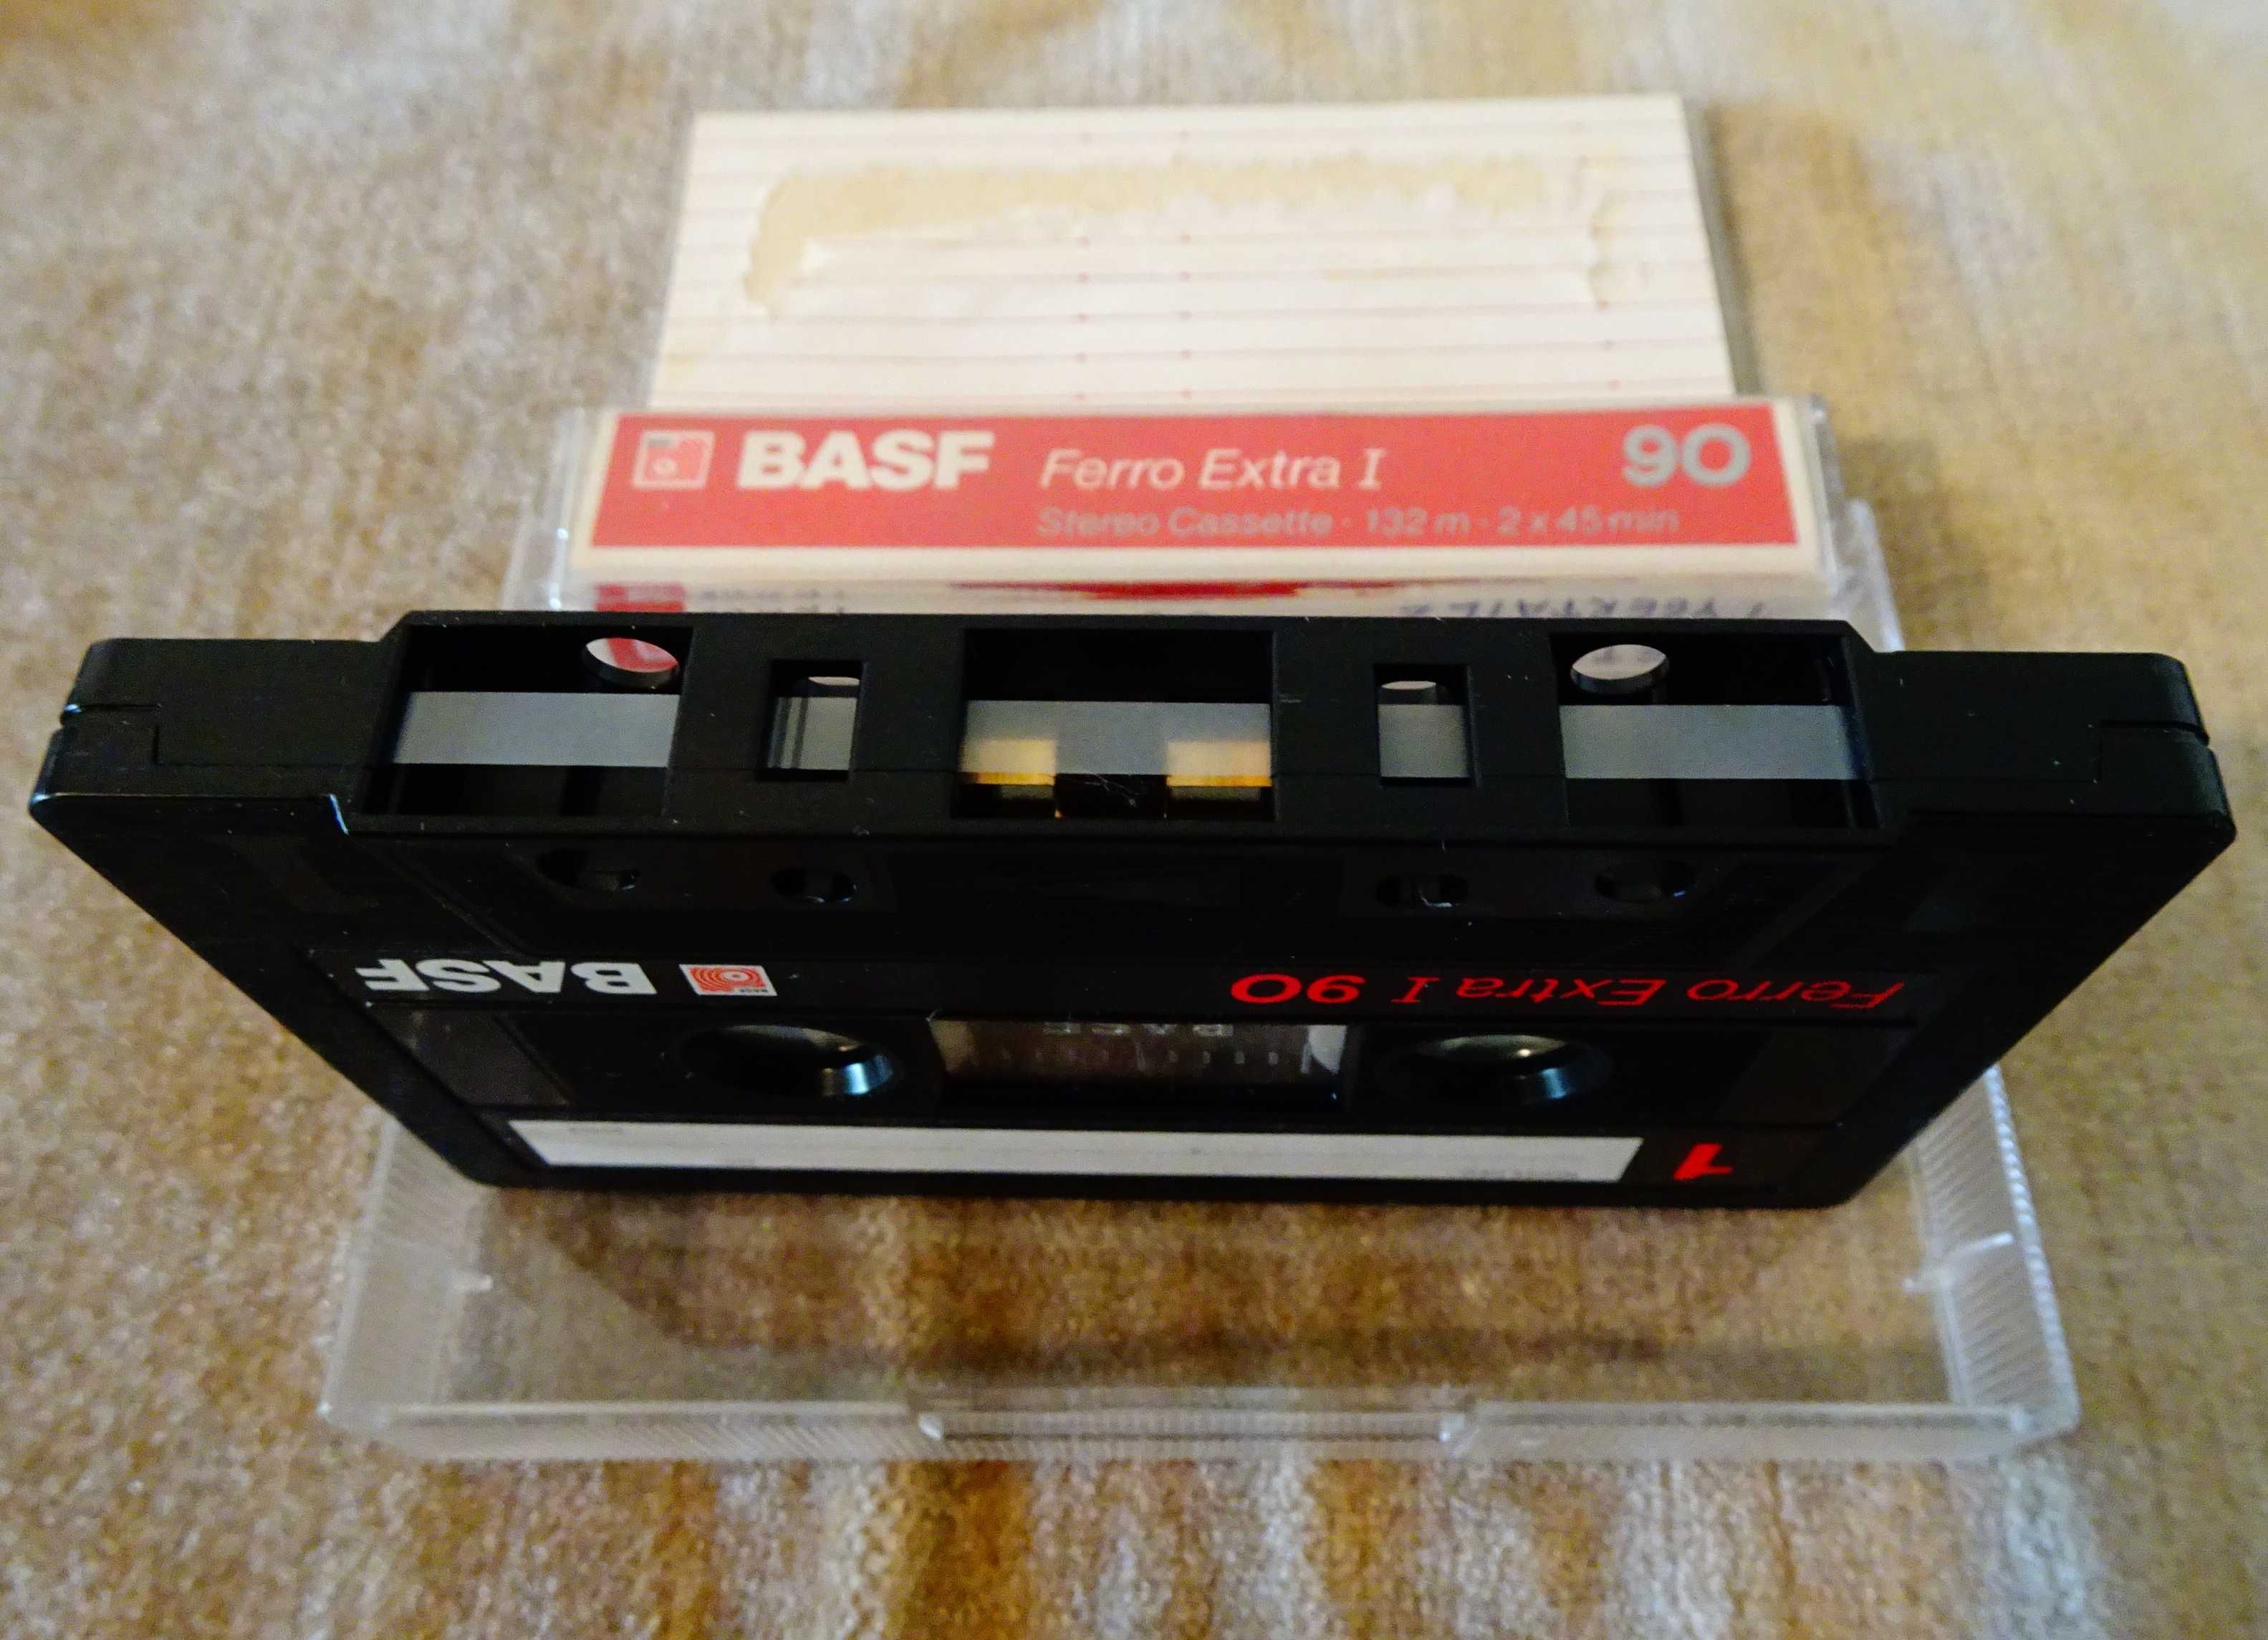 BASF аудиокасети с Pretty Maids и Tygertailz.